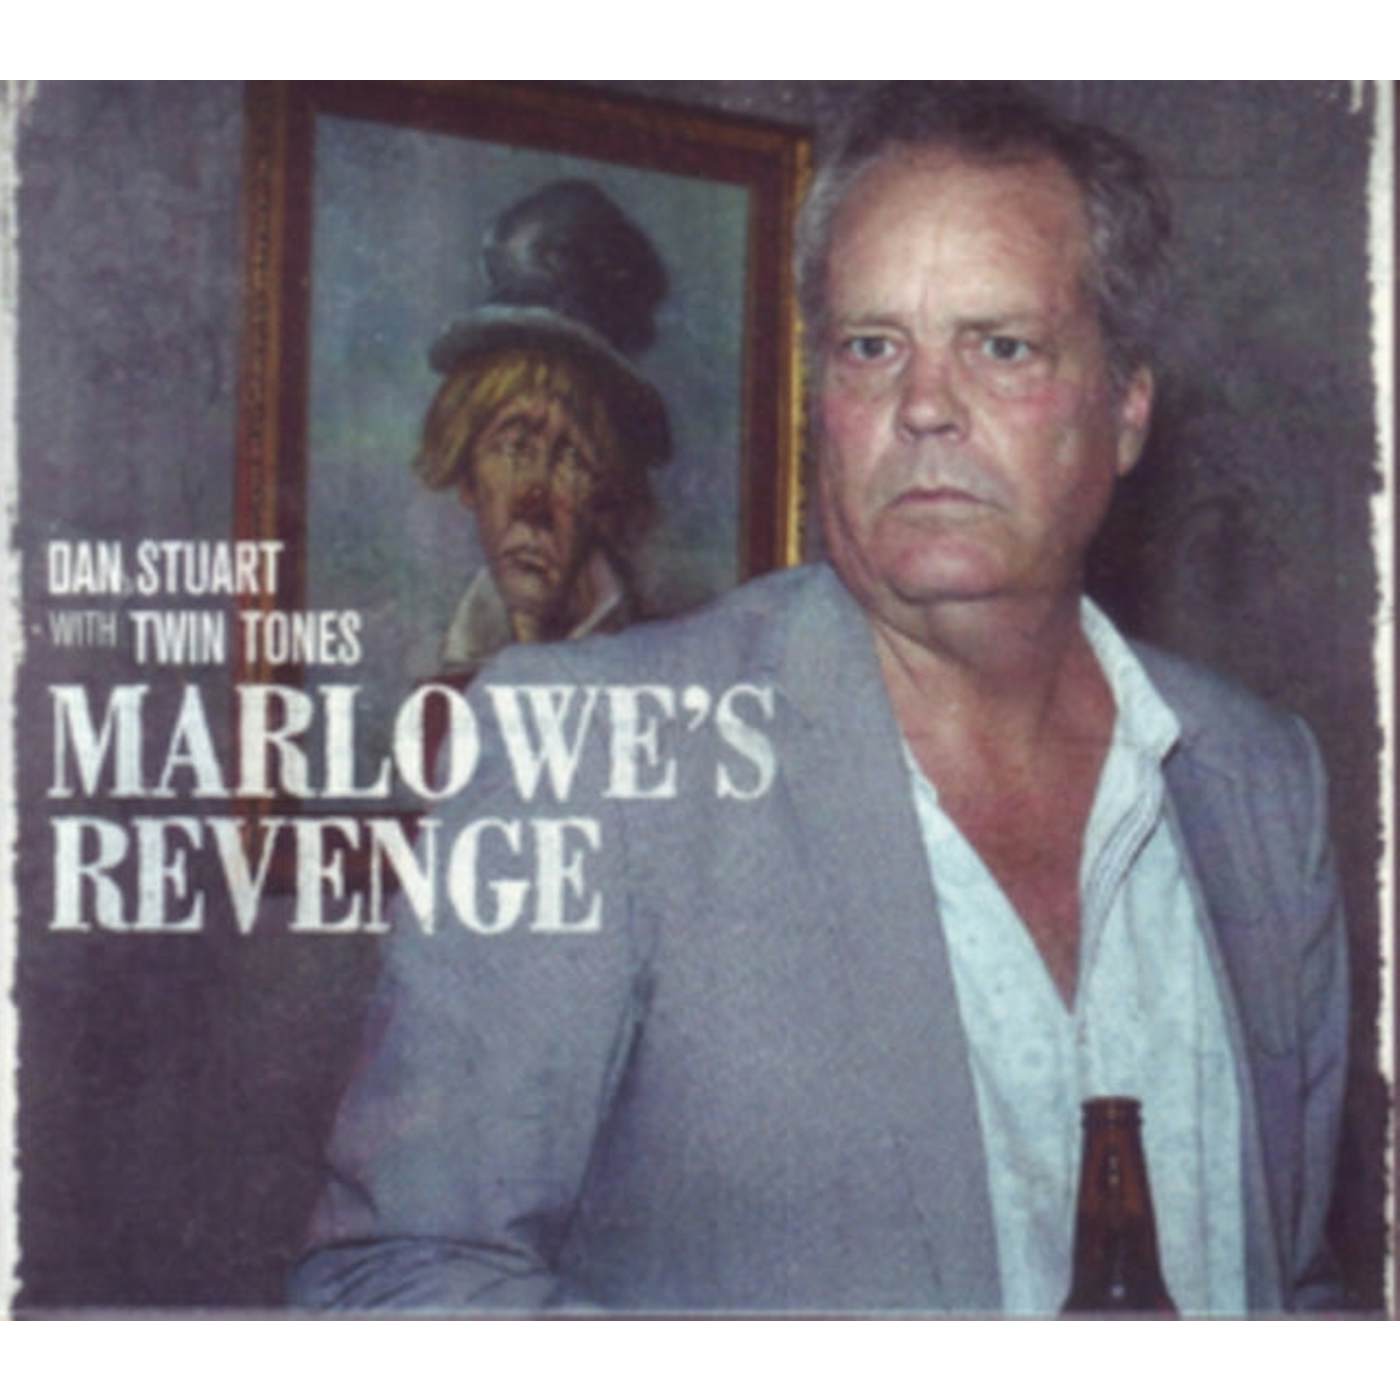 Dan Stuart CD - Marlowe's Revenge